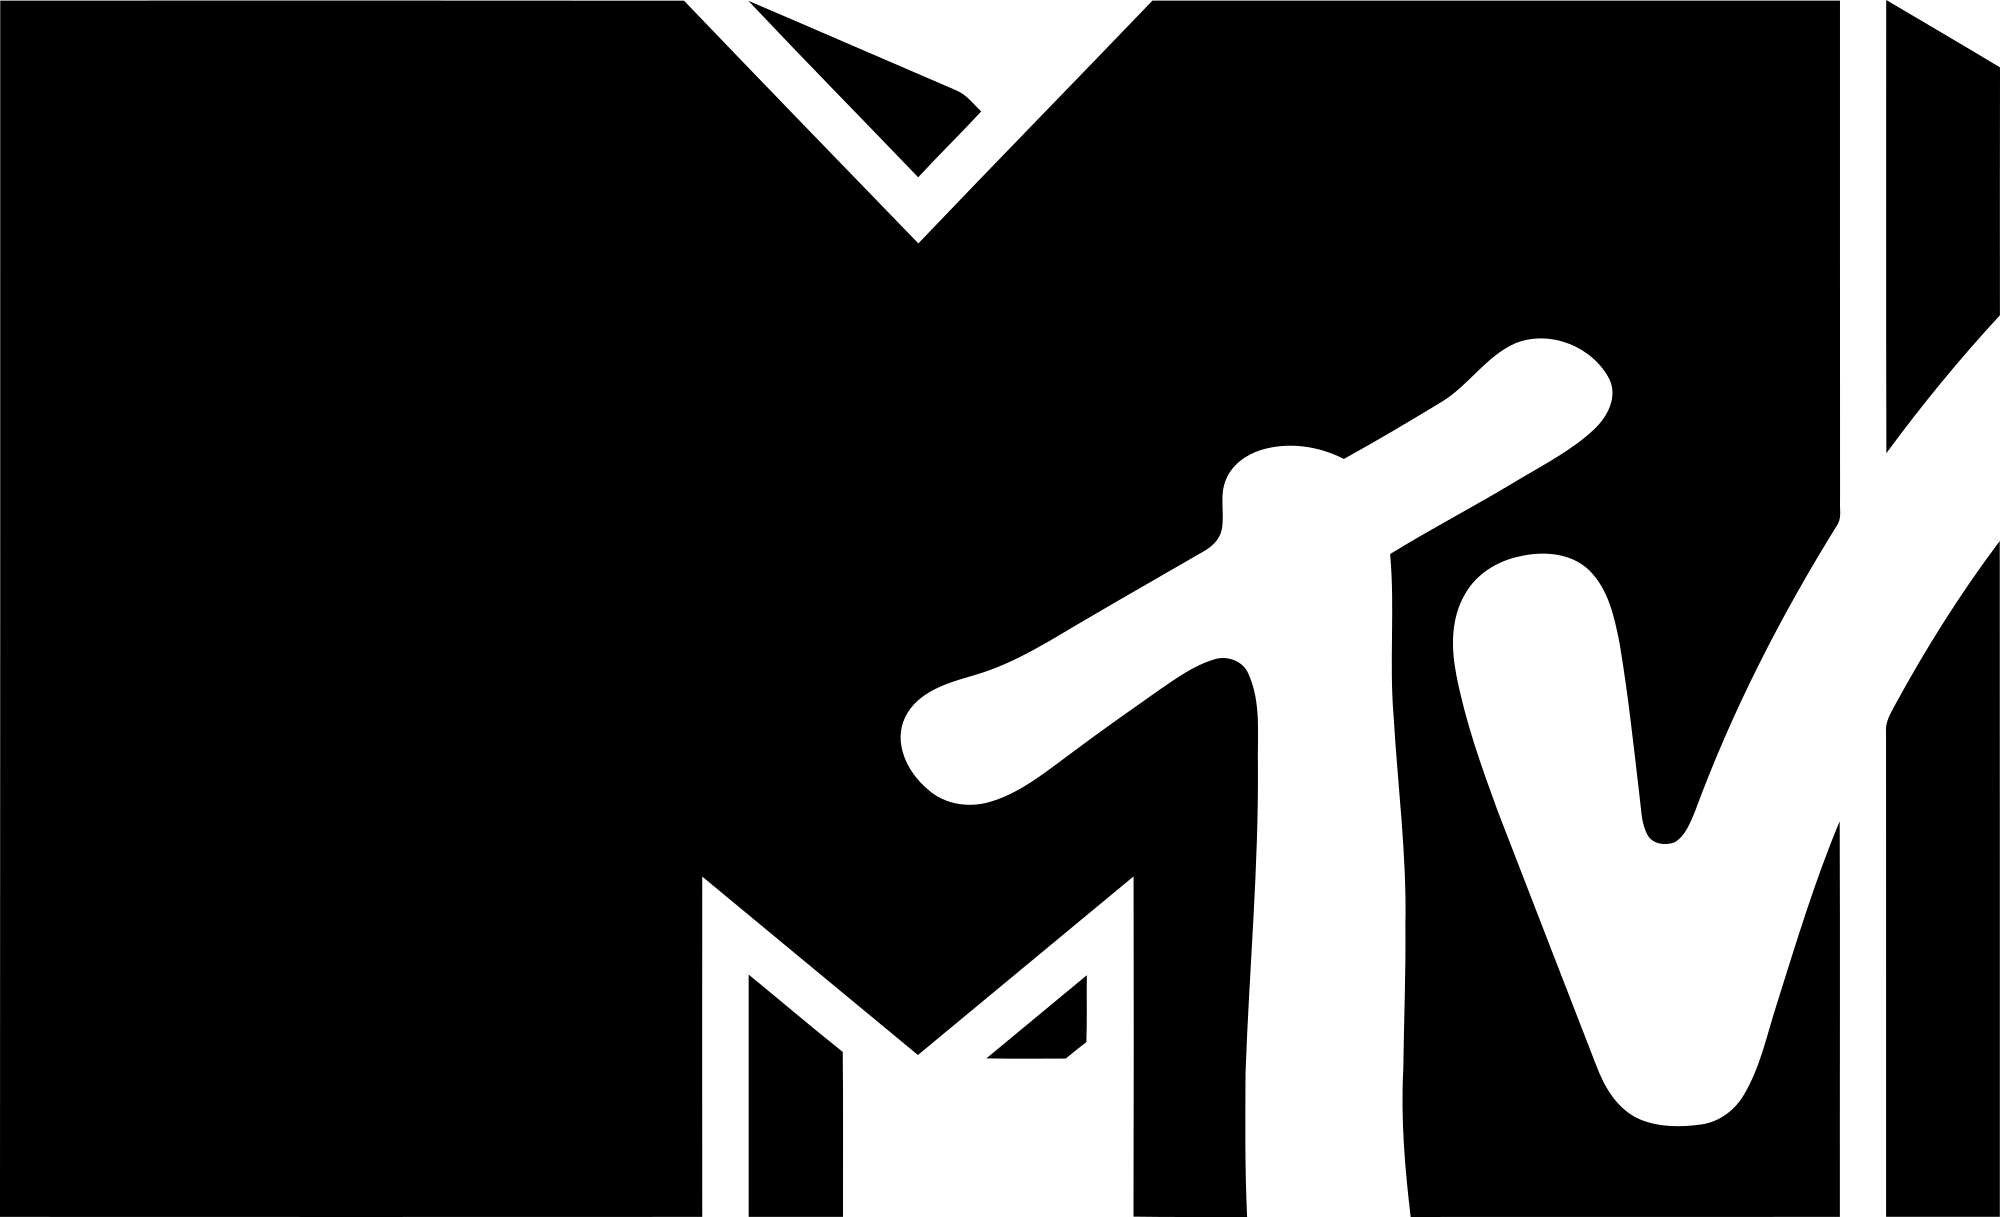 File:MTV logo.png